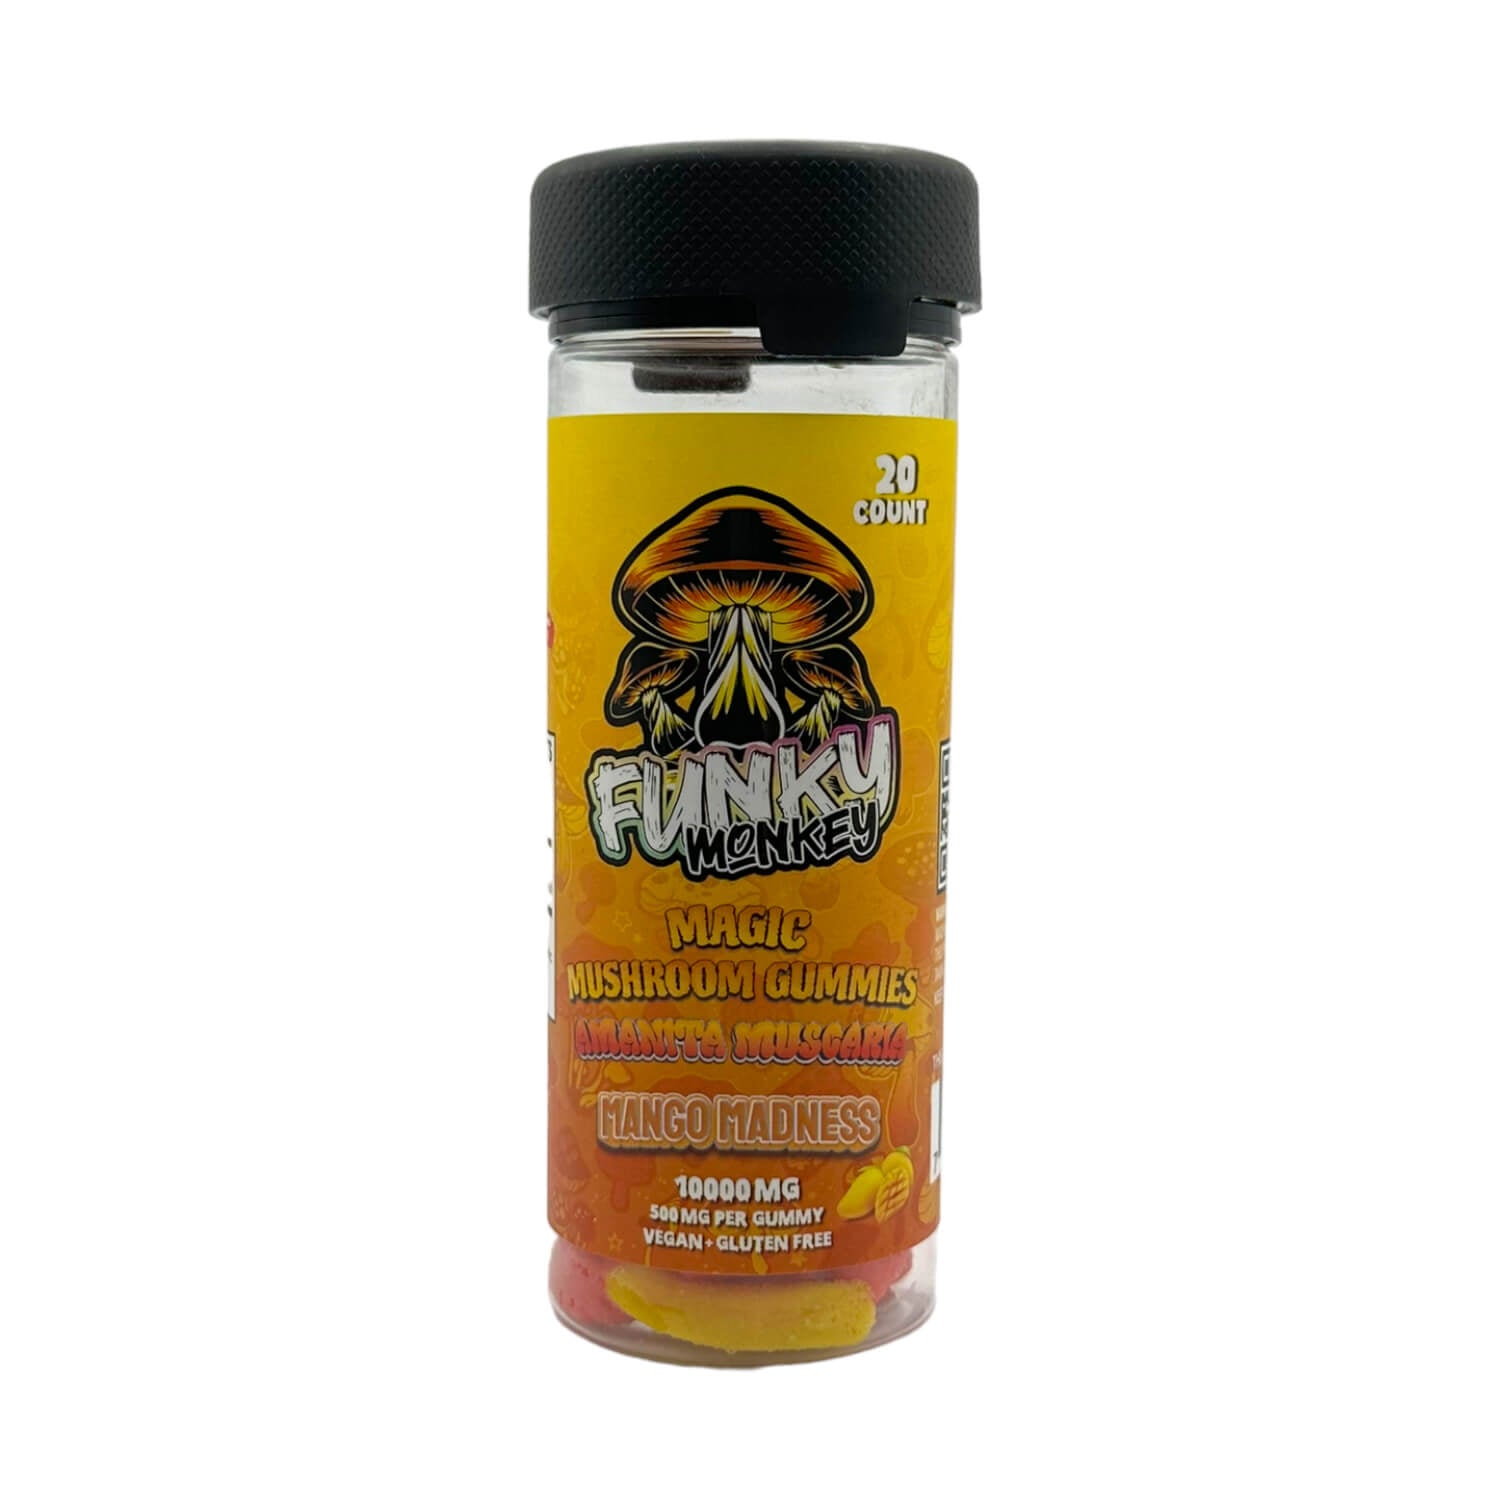 Funky Monkey - Mushroom Gummies - 10000 MG - 100% Natural - 20 Gummies (500MG Each) - Made in USA